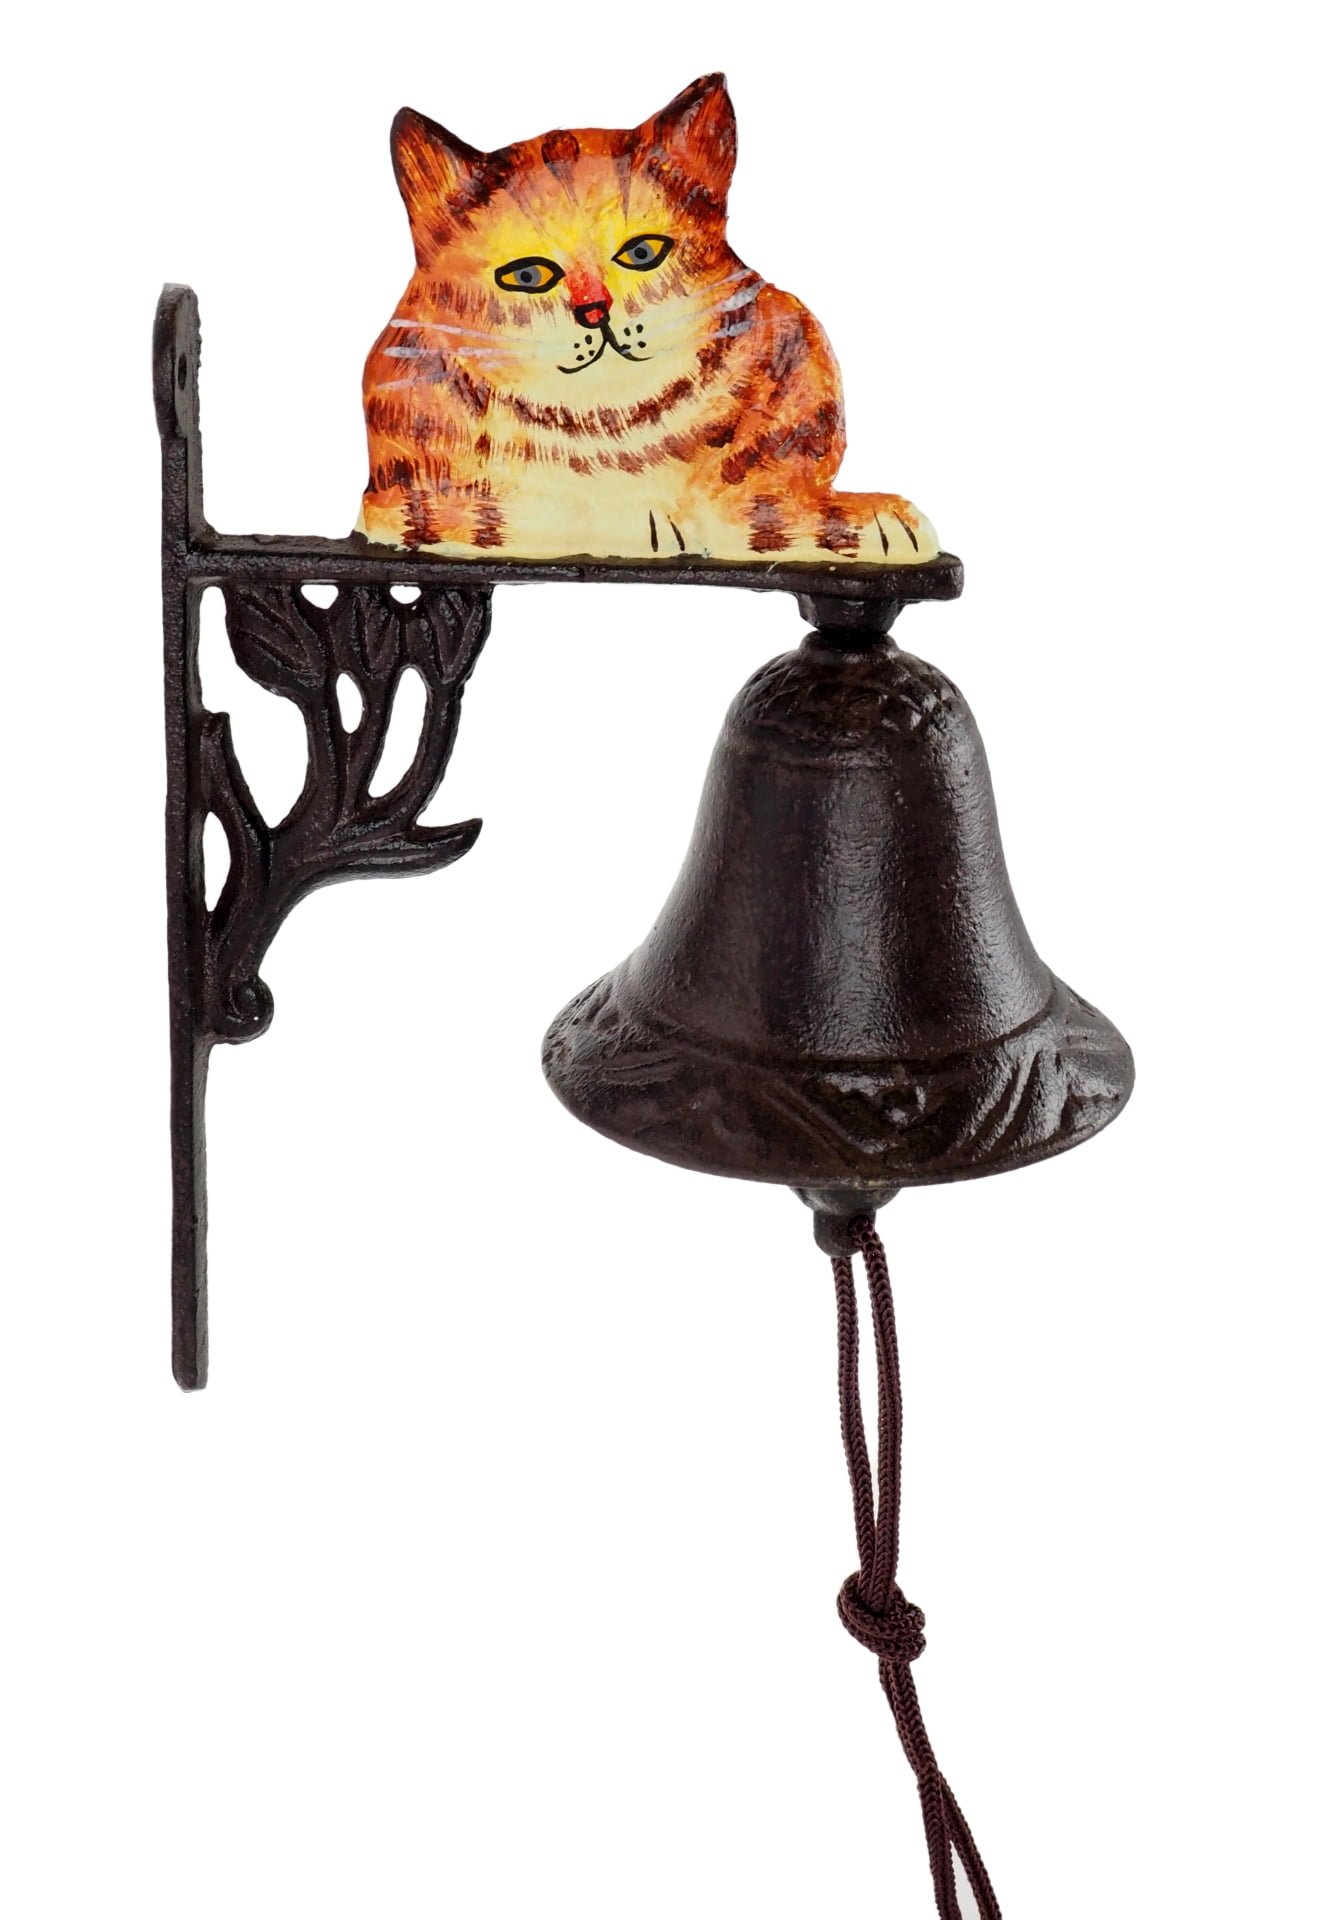 rudy kot i żeliwny dzwonek